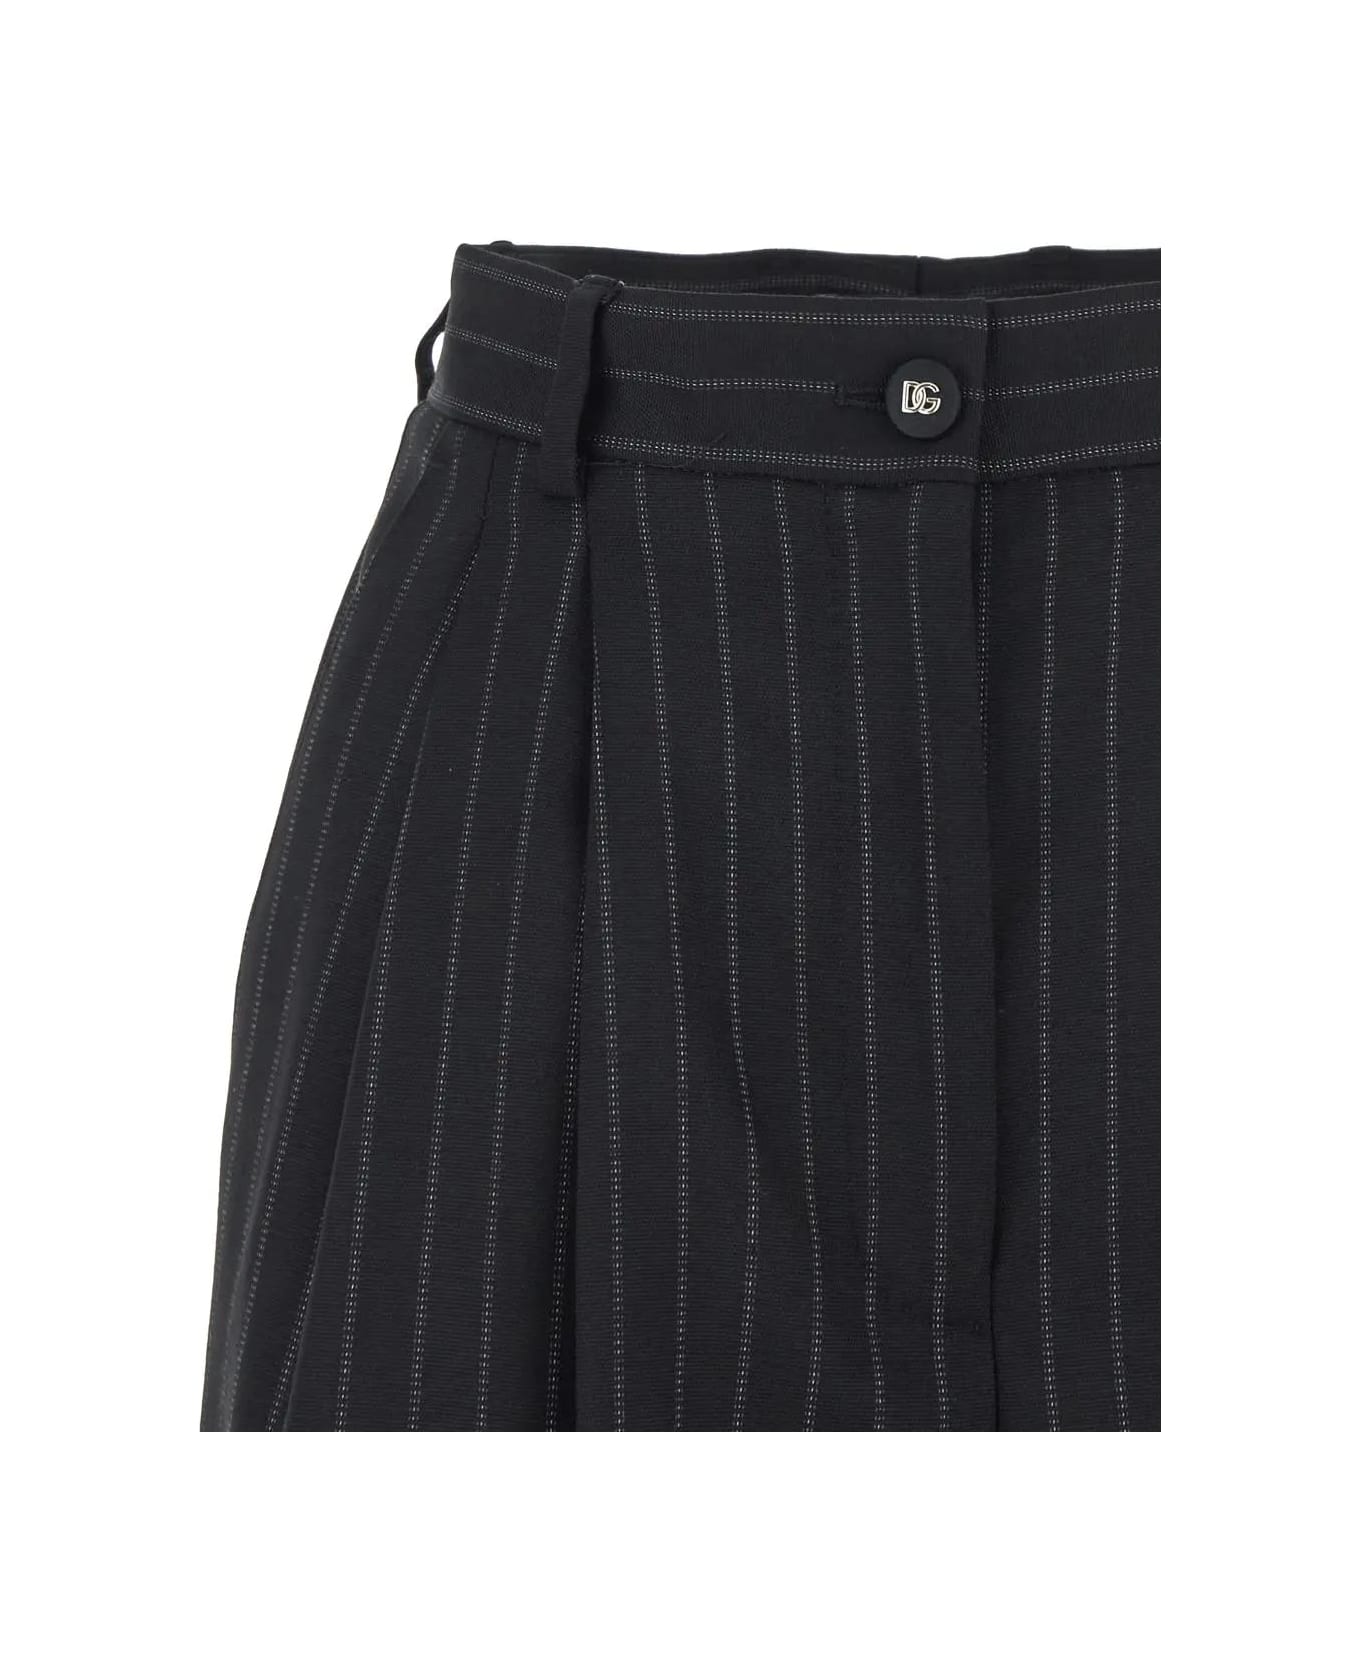 Dolce & Gabbana Wool Trousers - BLACK